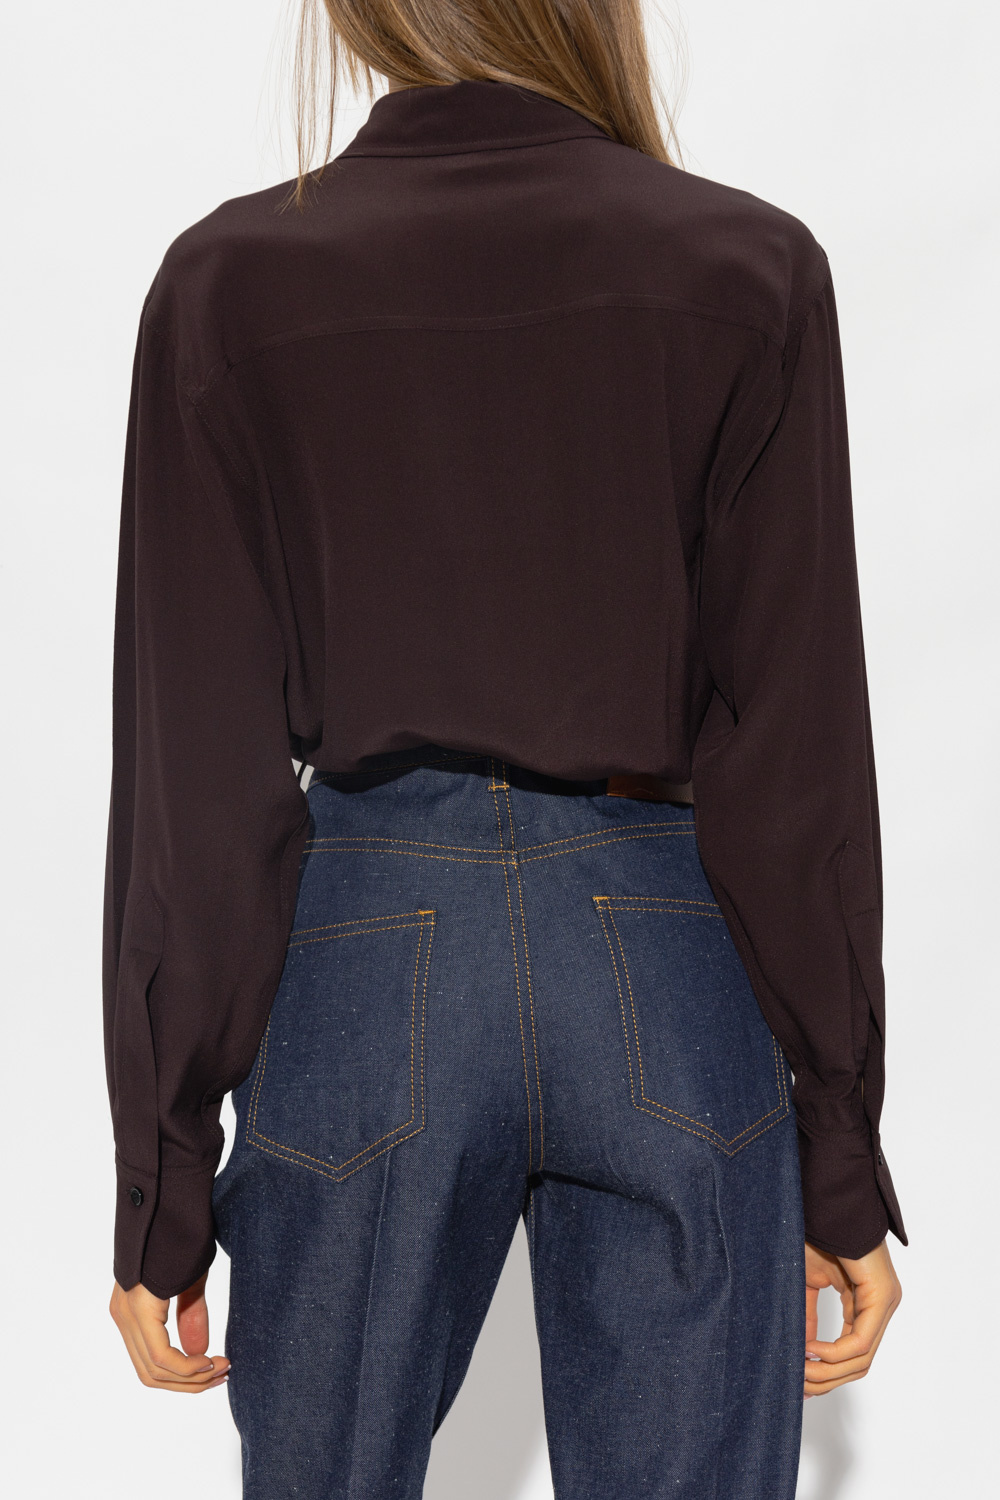 Victoria Beckham Silk sort shirt with pockets